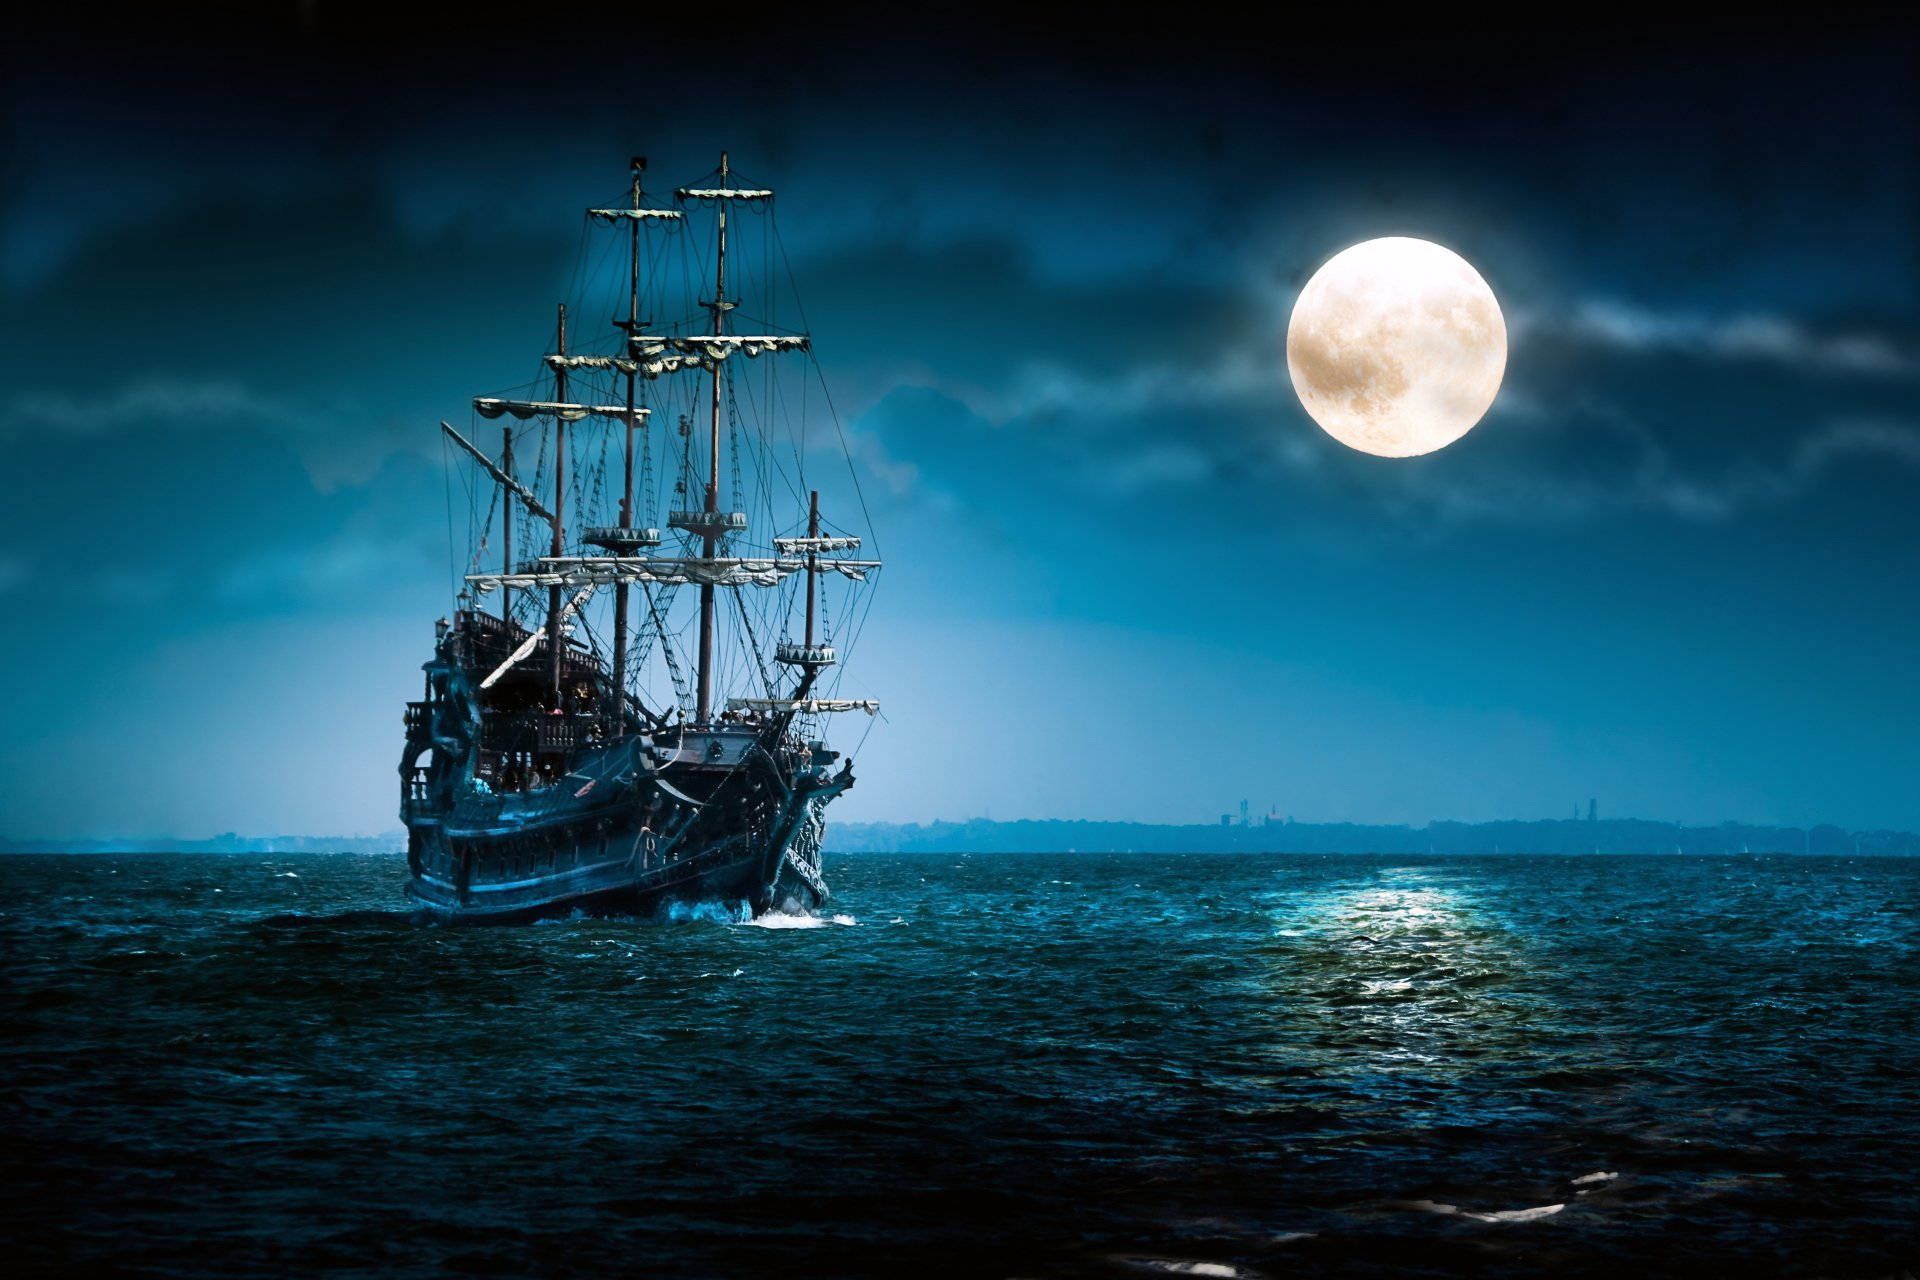 Free Pirate Ship Wallpaper Downloads, Pirate Ship Wallpaper for FREE